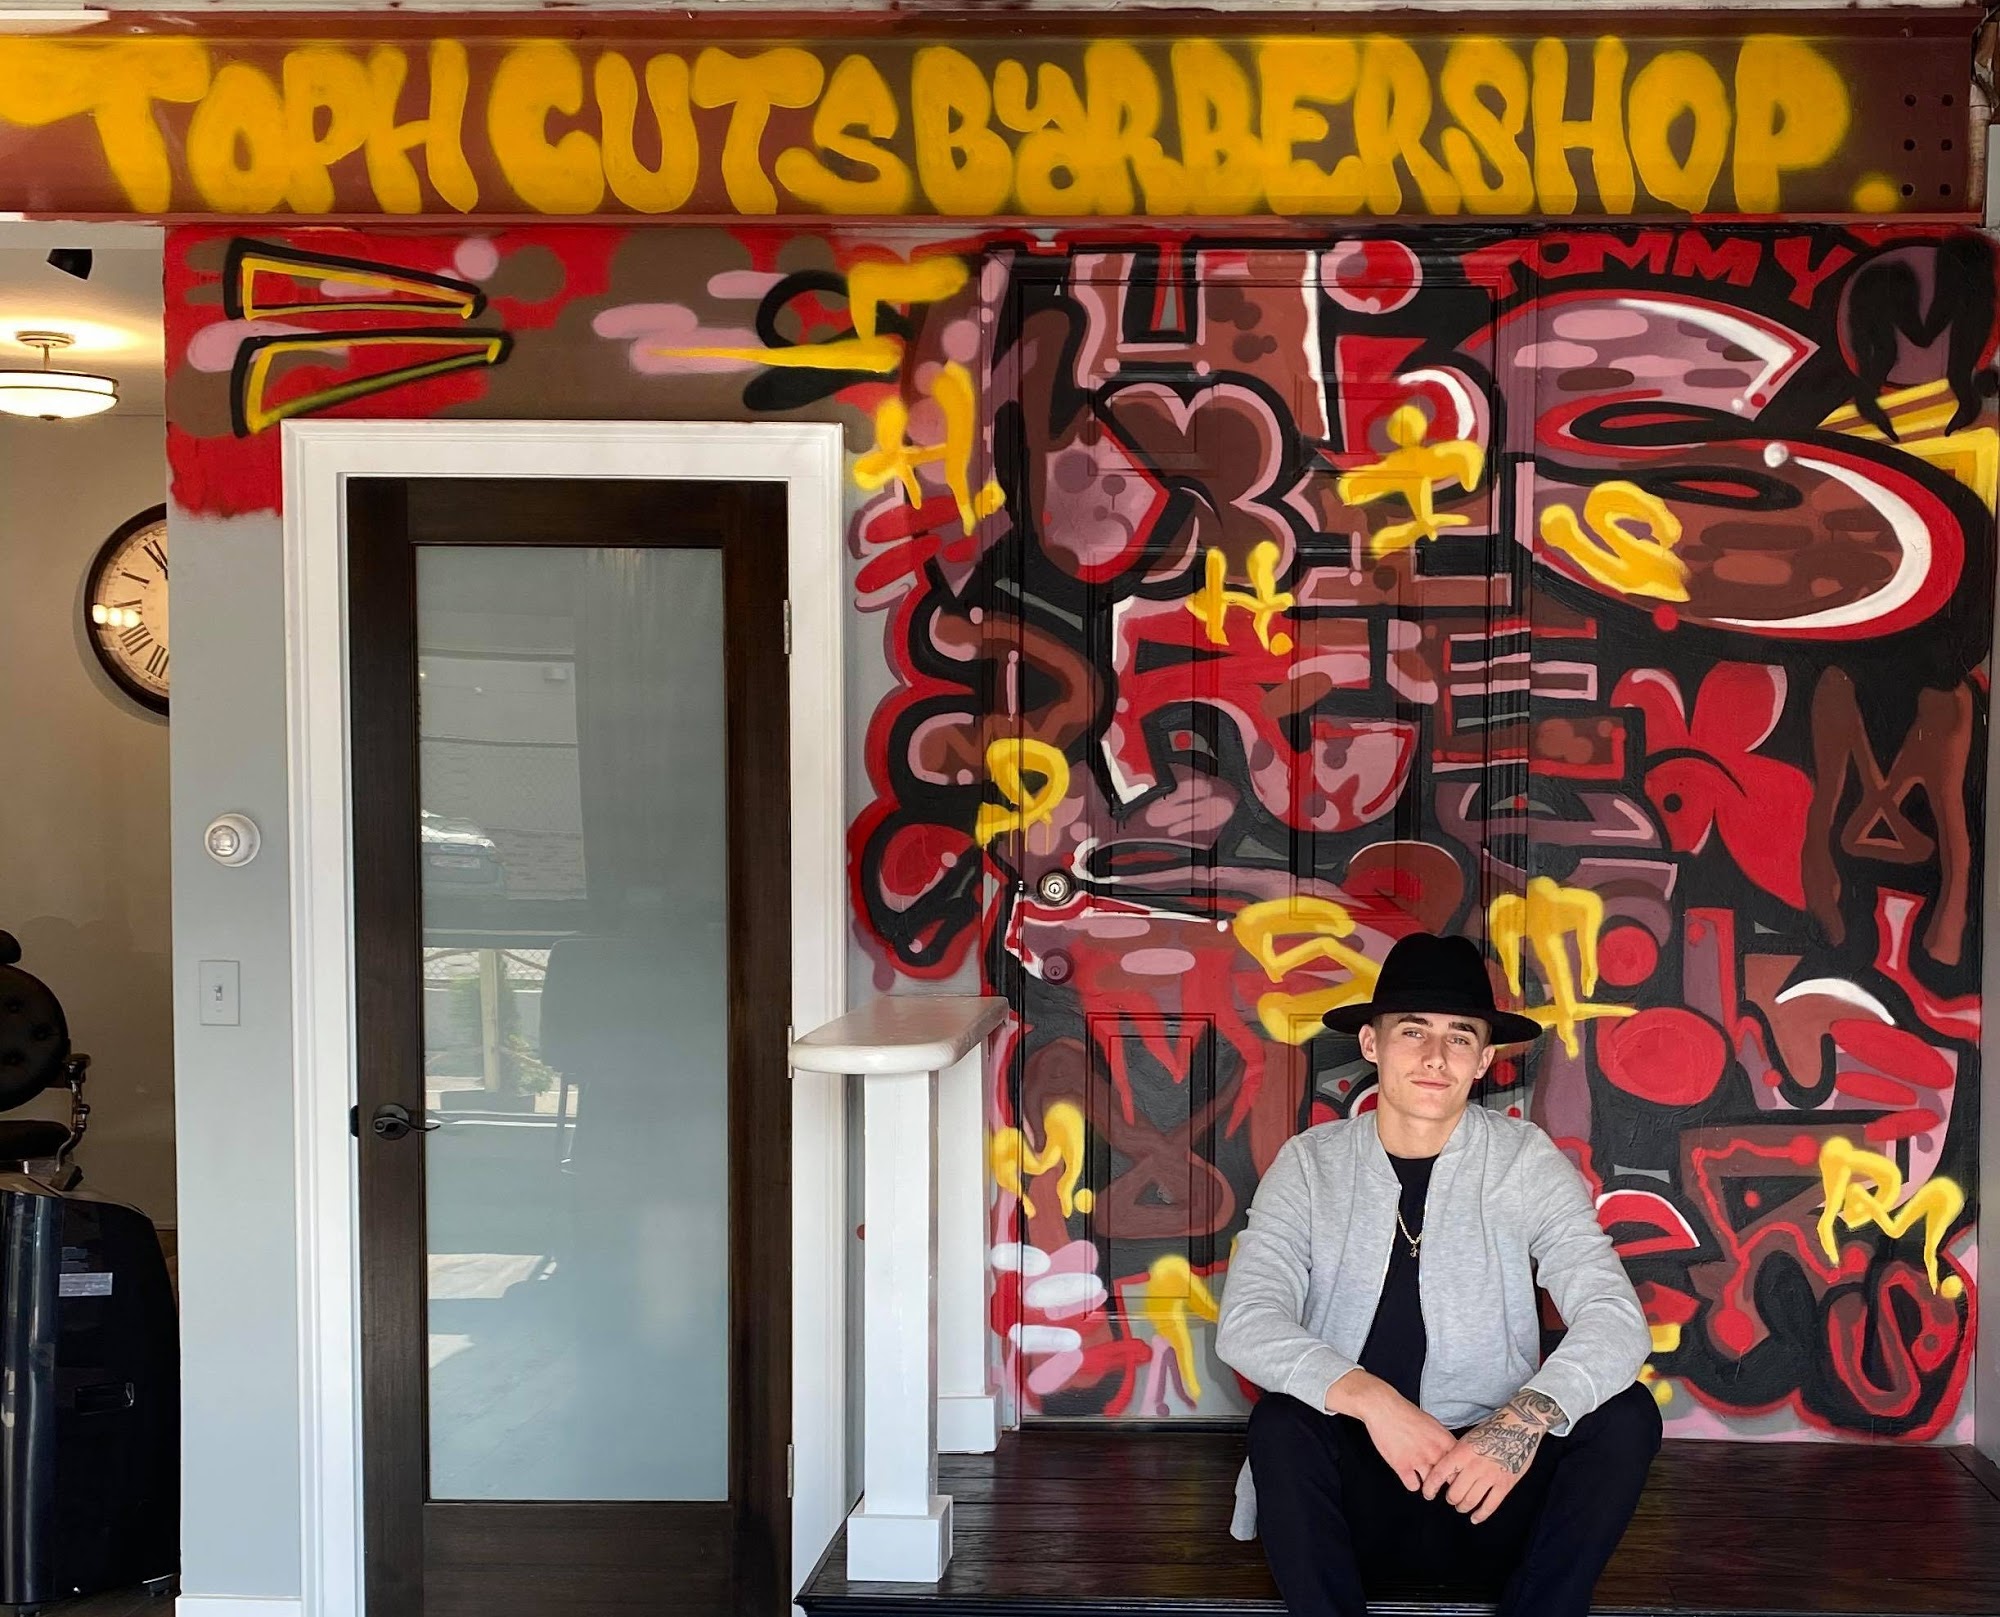 TophCuts Barbershop